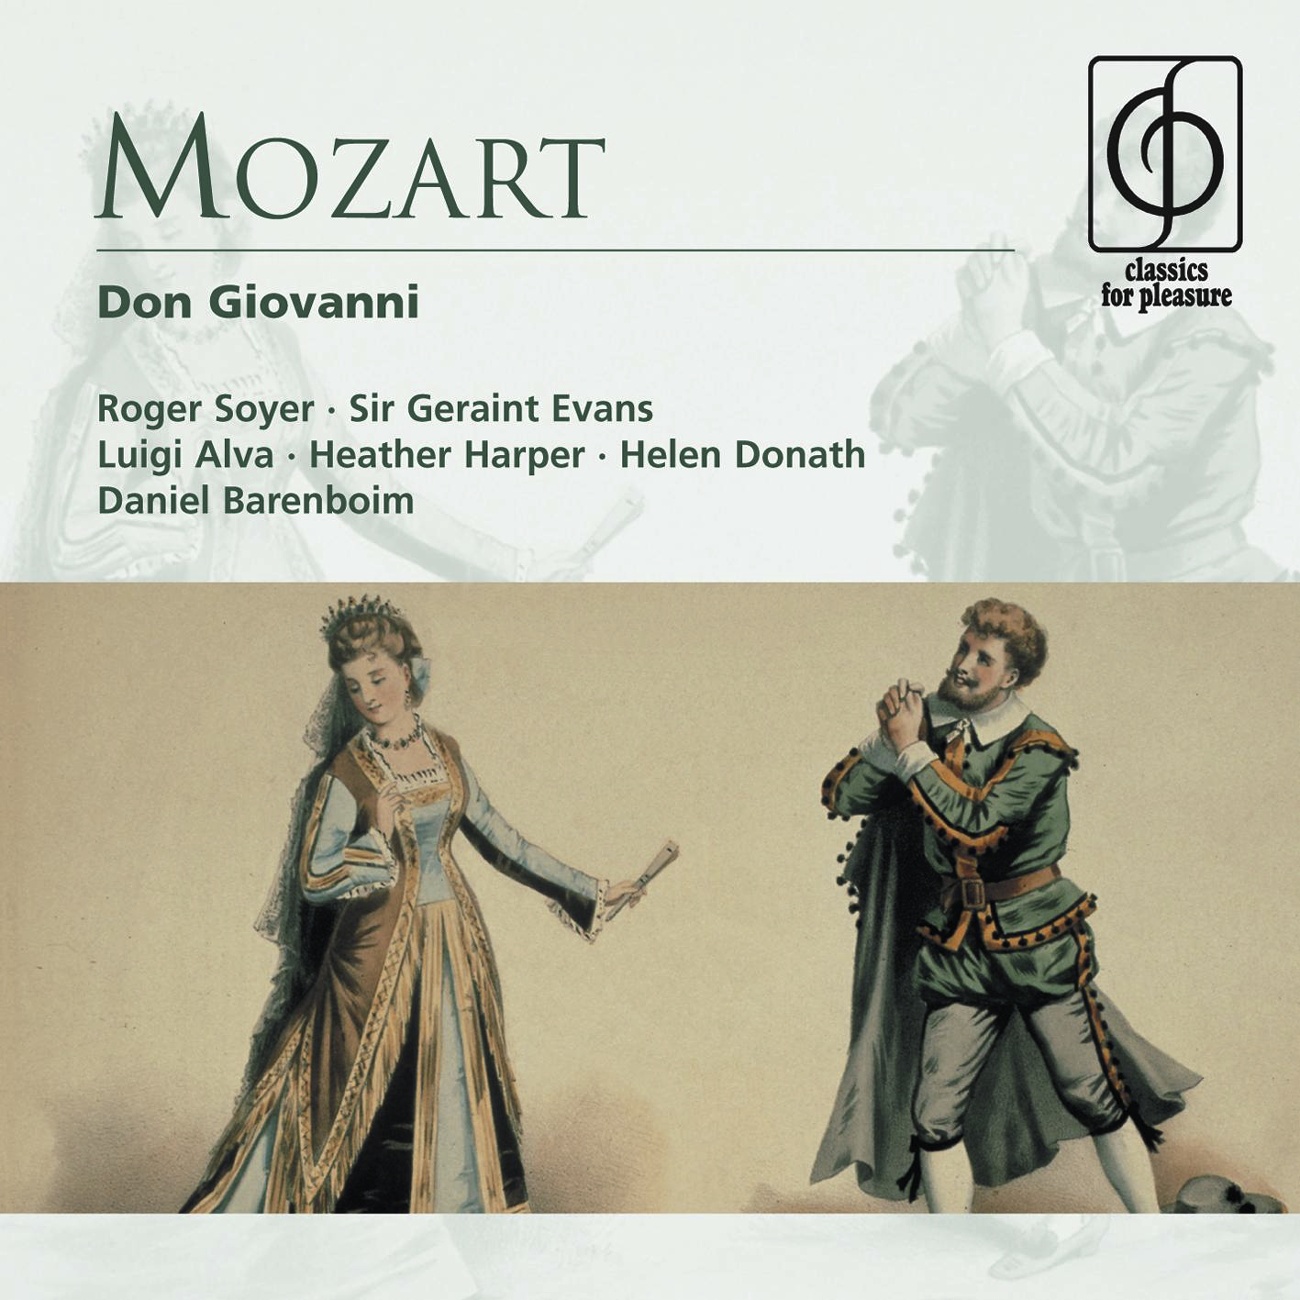 Don Giovanni - Opera in two acts K527 (1991 Digital Remaster), Act II, Scena quarta: Calmatevi, idol mio! (Don Ottavio/Donna Ann